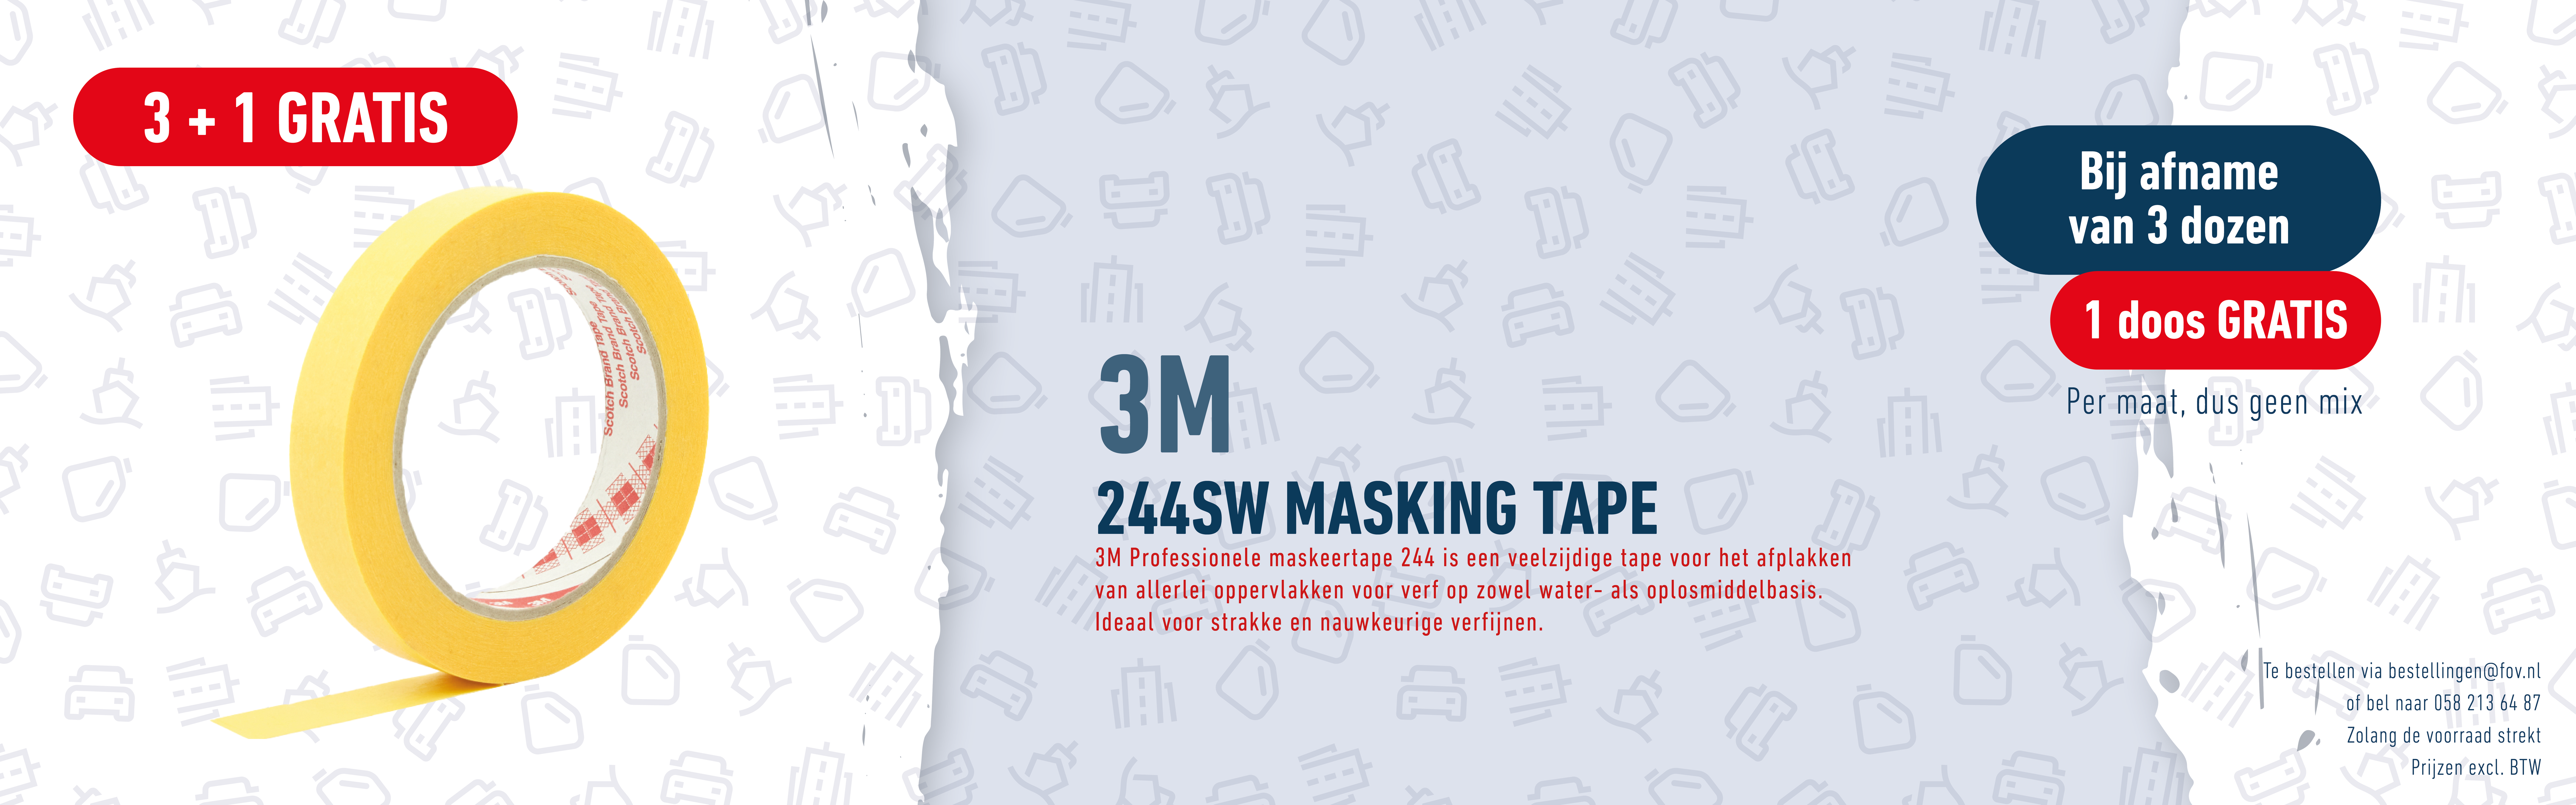 3m 244SW Masking Tape